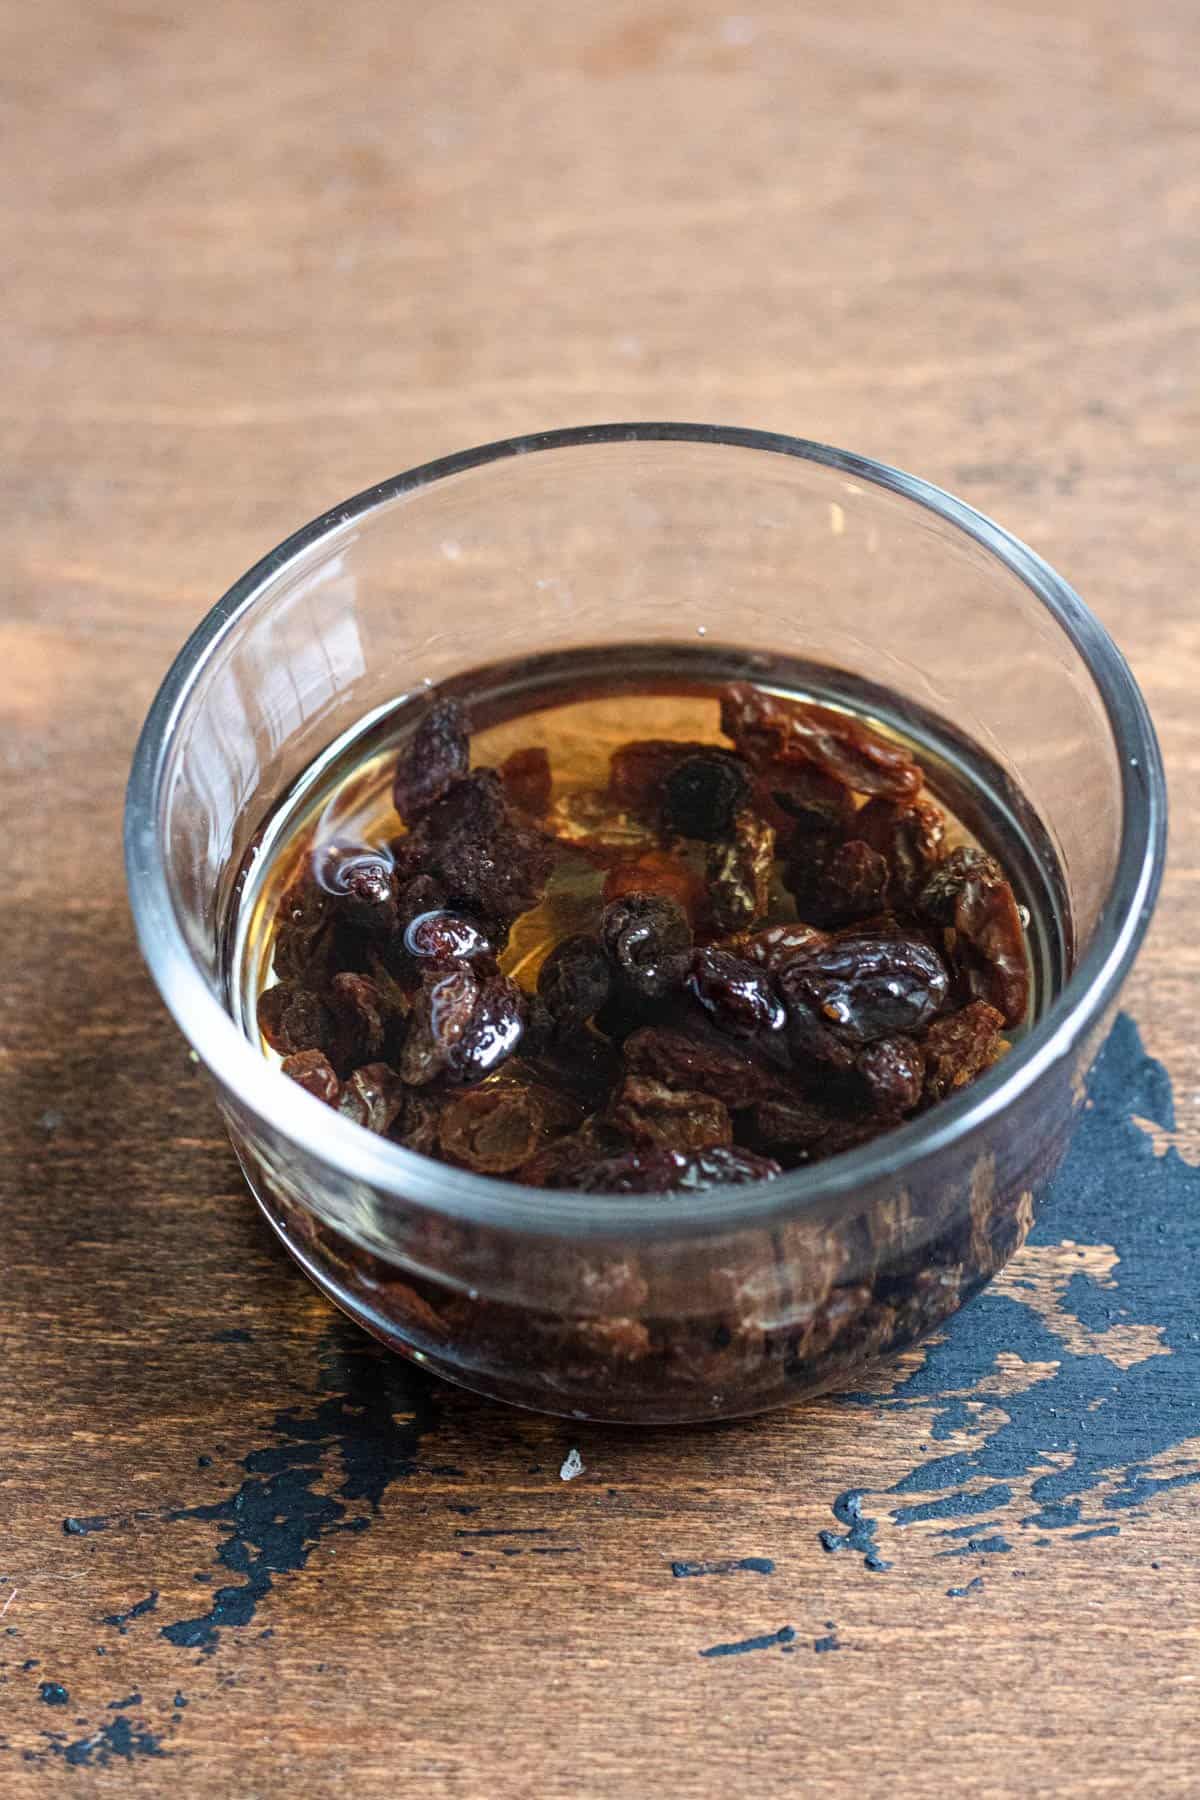 Raisins soaking in rum in a small glass bowl to prepare for Kaiserschmarrn.